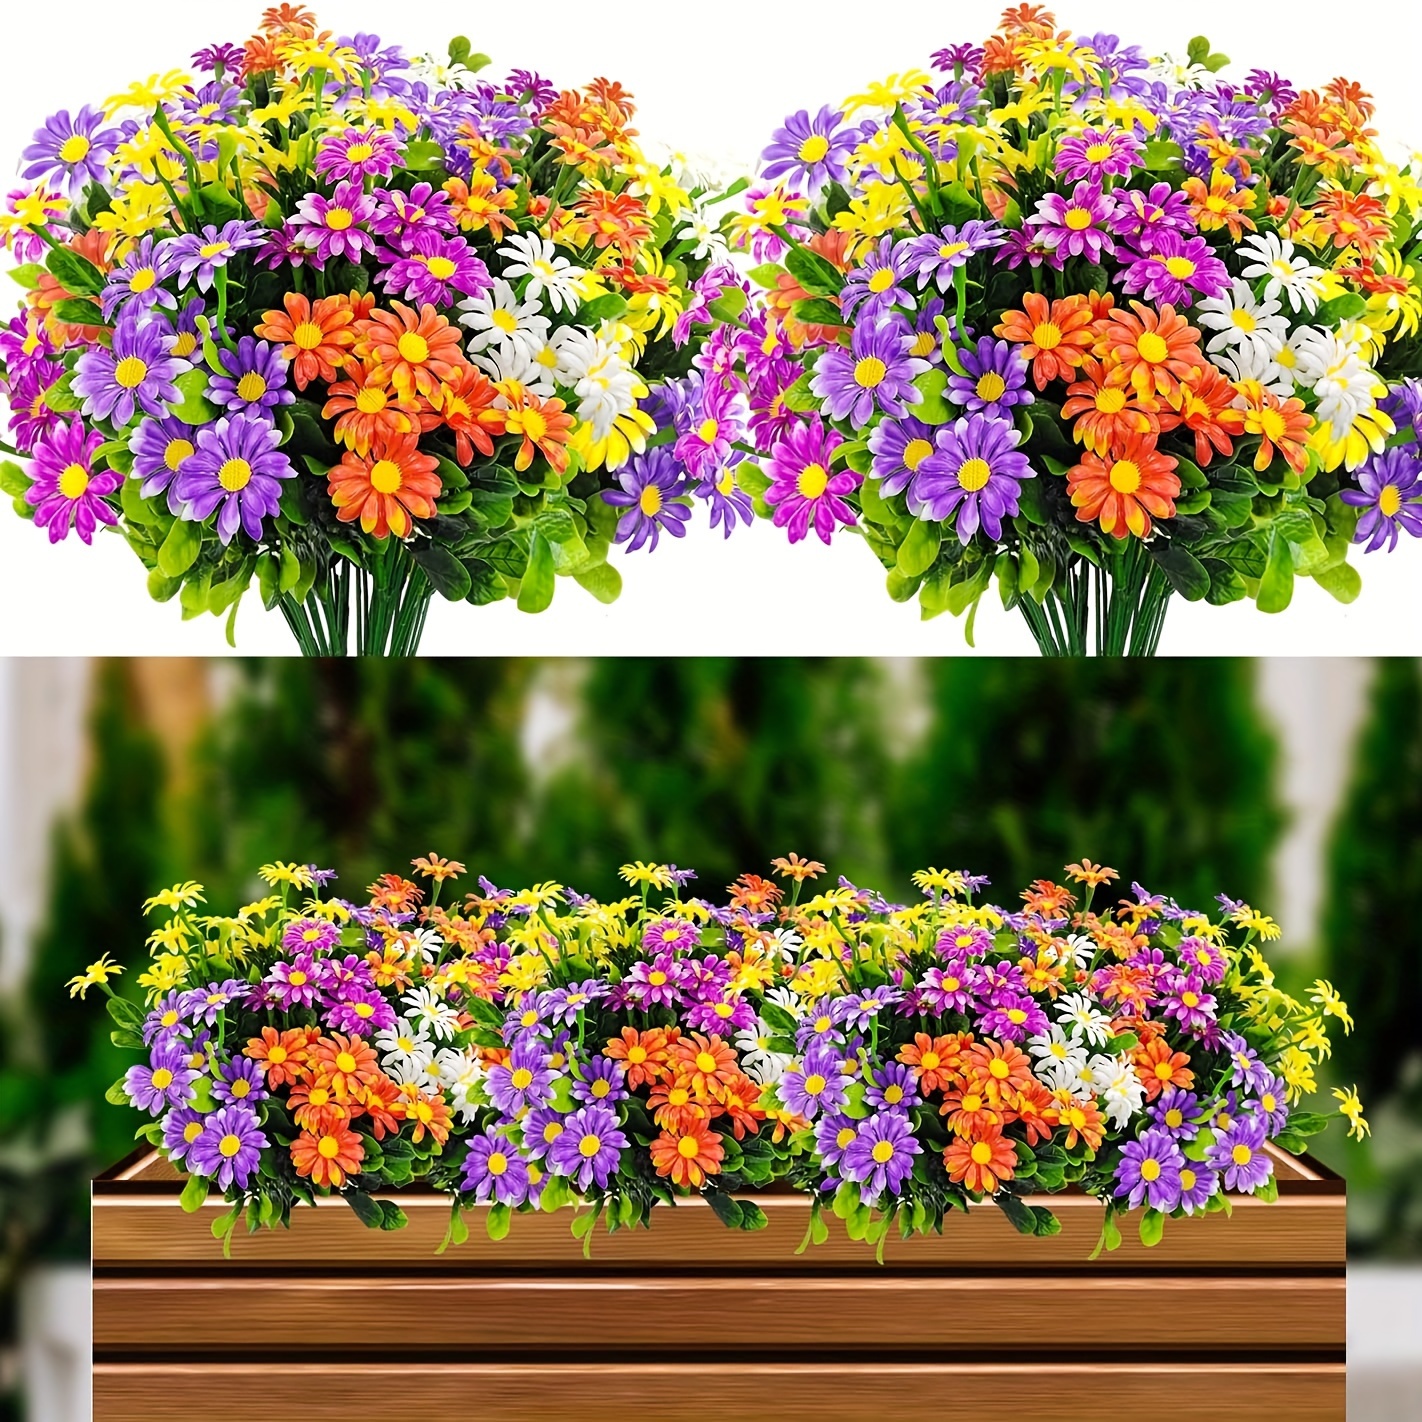 

Aubeinson 10-piece Uv Resistant Artificial Daisy Flowers - No Fade, Outdoor Faux Plastic Plants For Garden, Porch & Window Box Decor